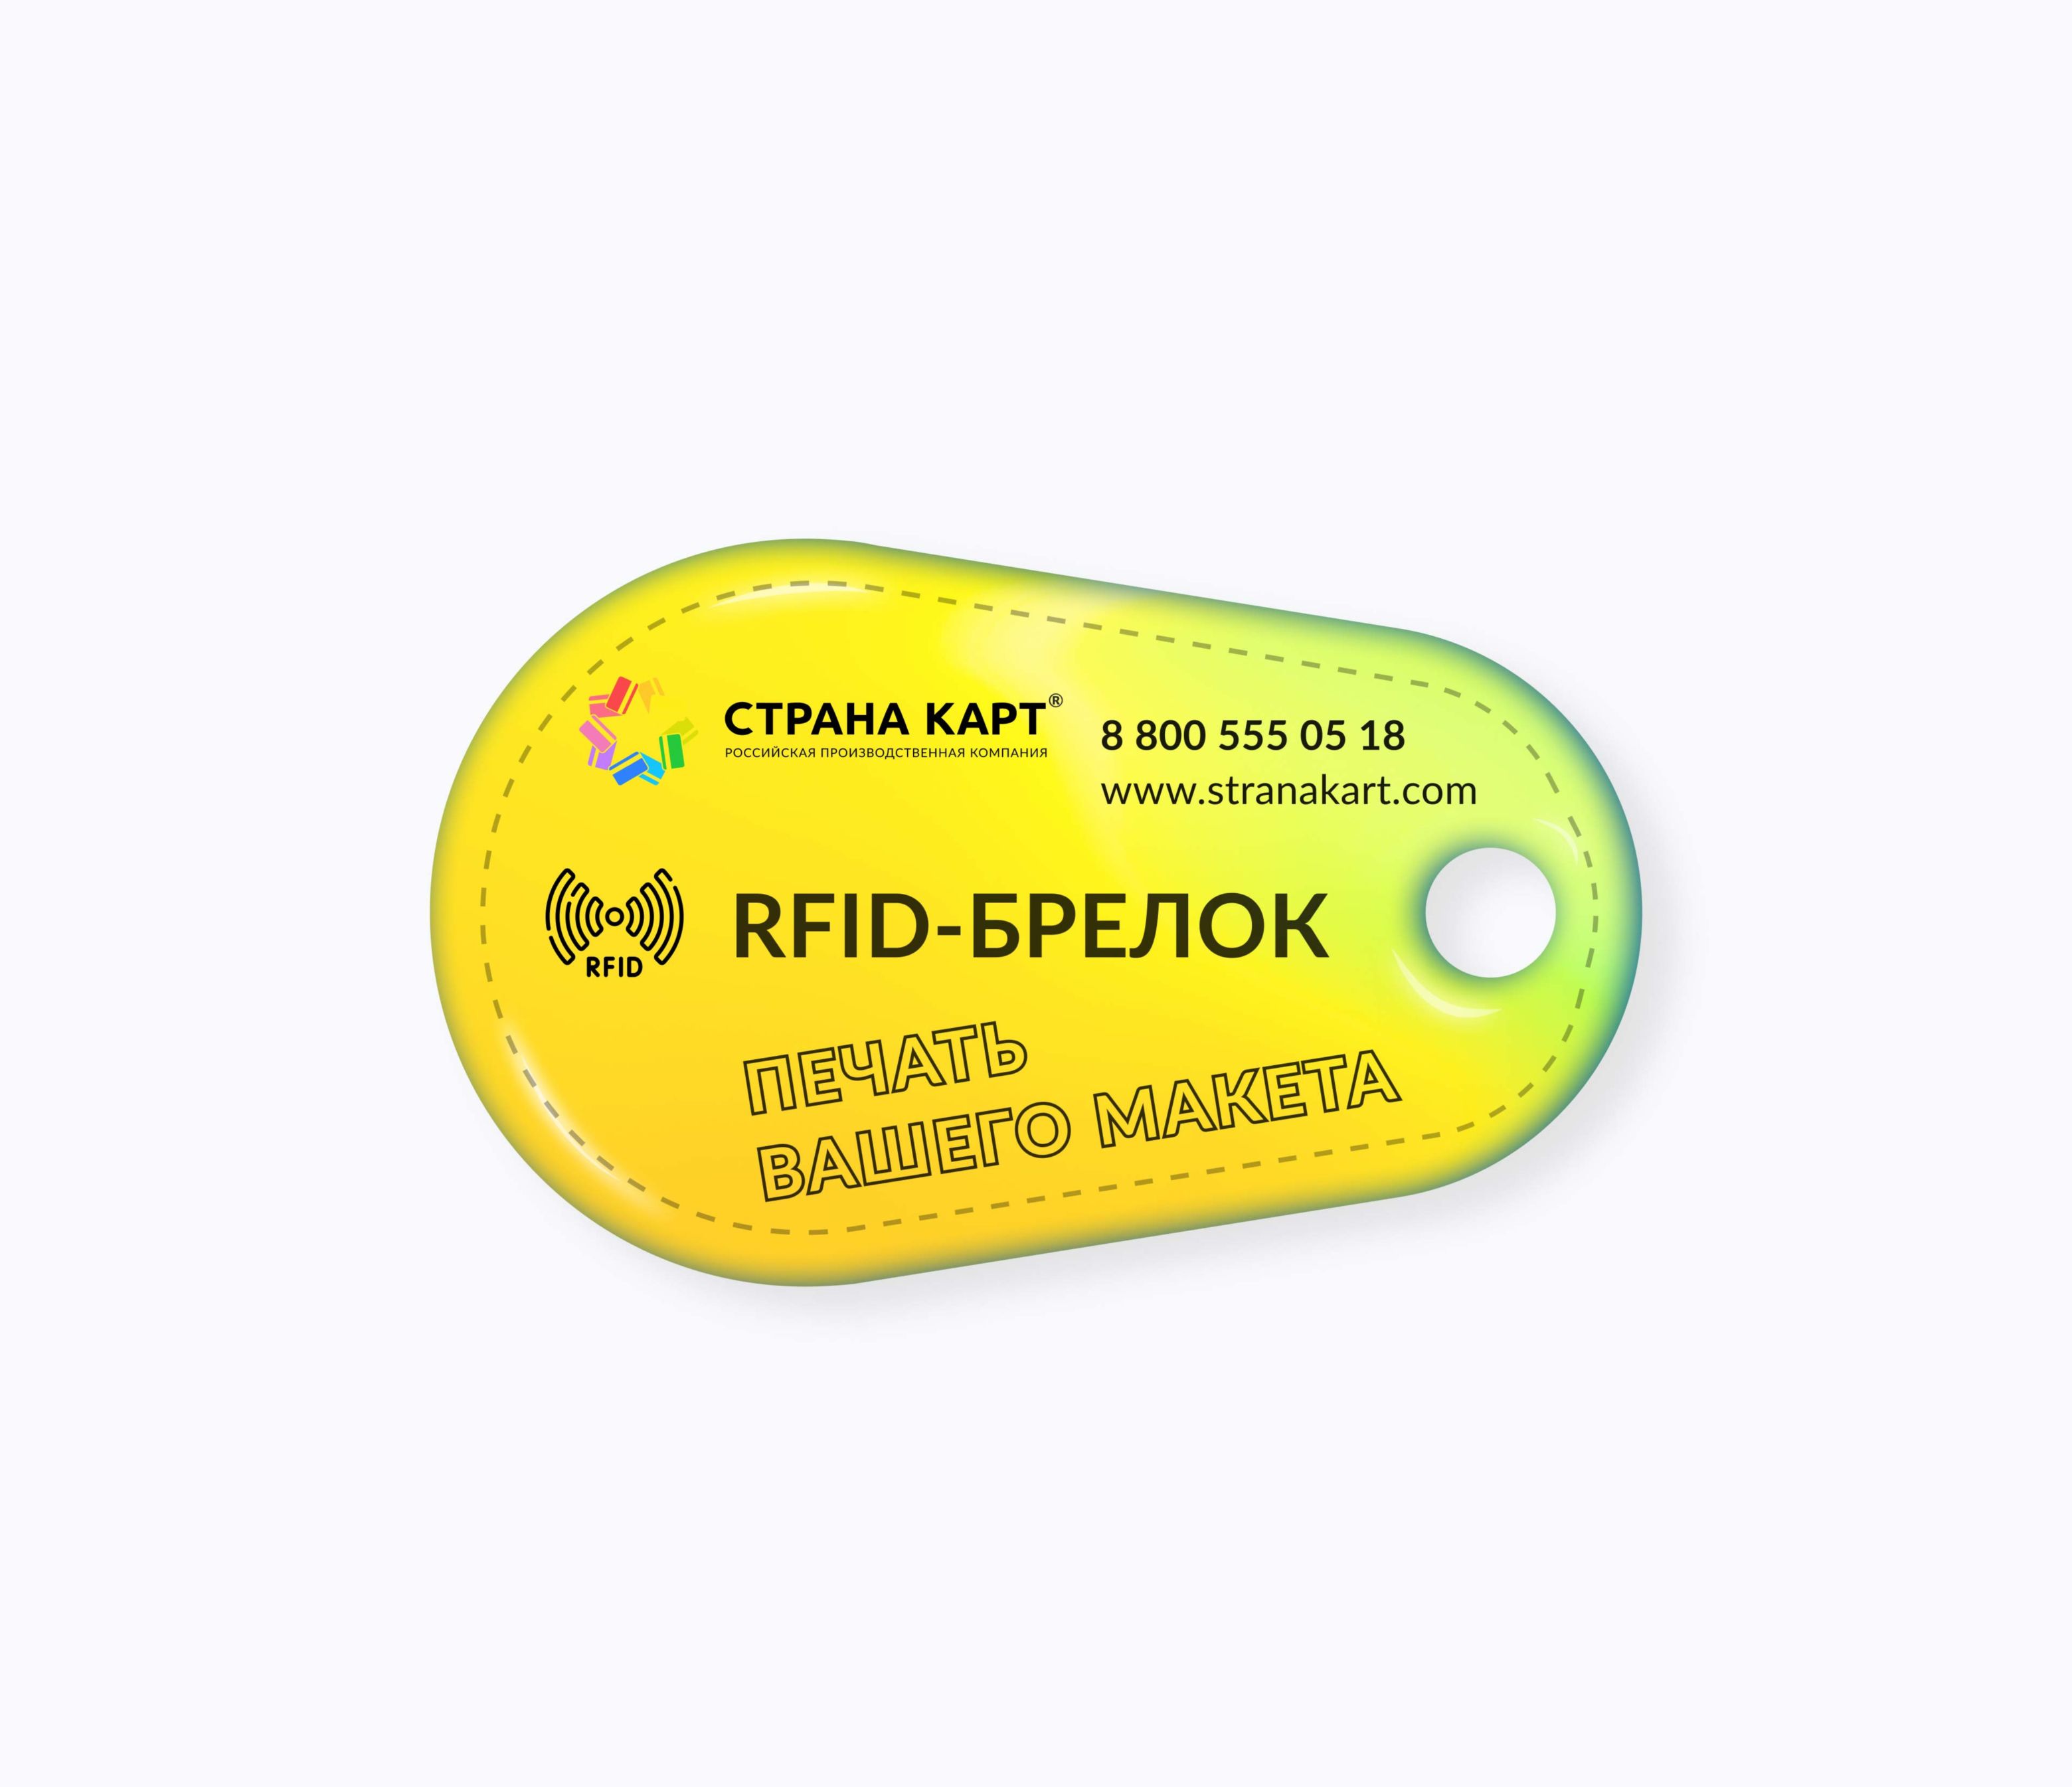 Каплевидные RFID-брелоки NEOKEY® с чипом для аквапарков RFID-брелоки NEOKEY® с чипом для аквапарков